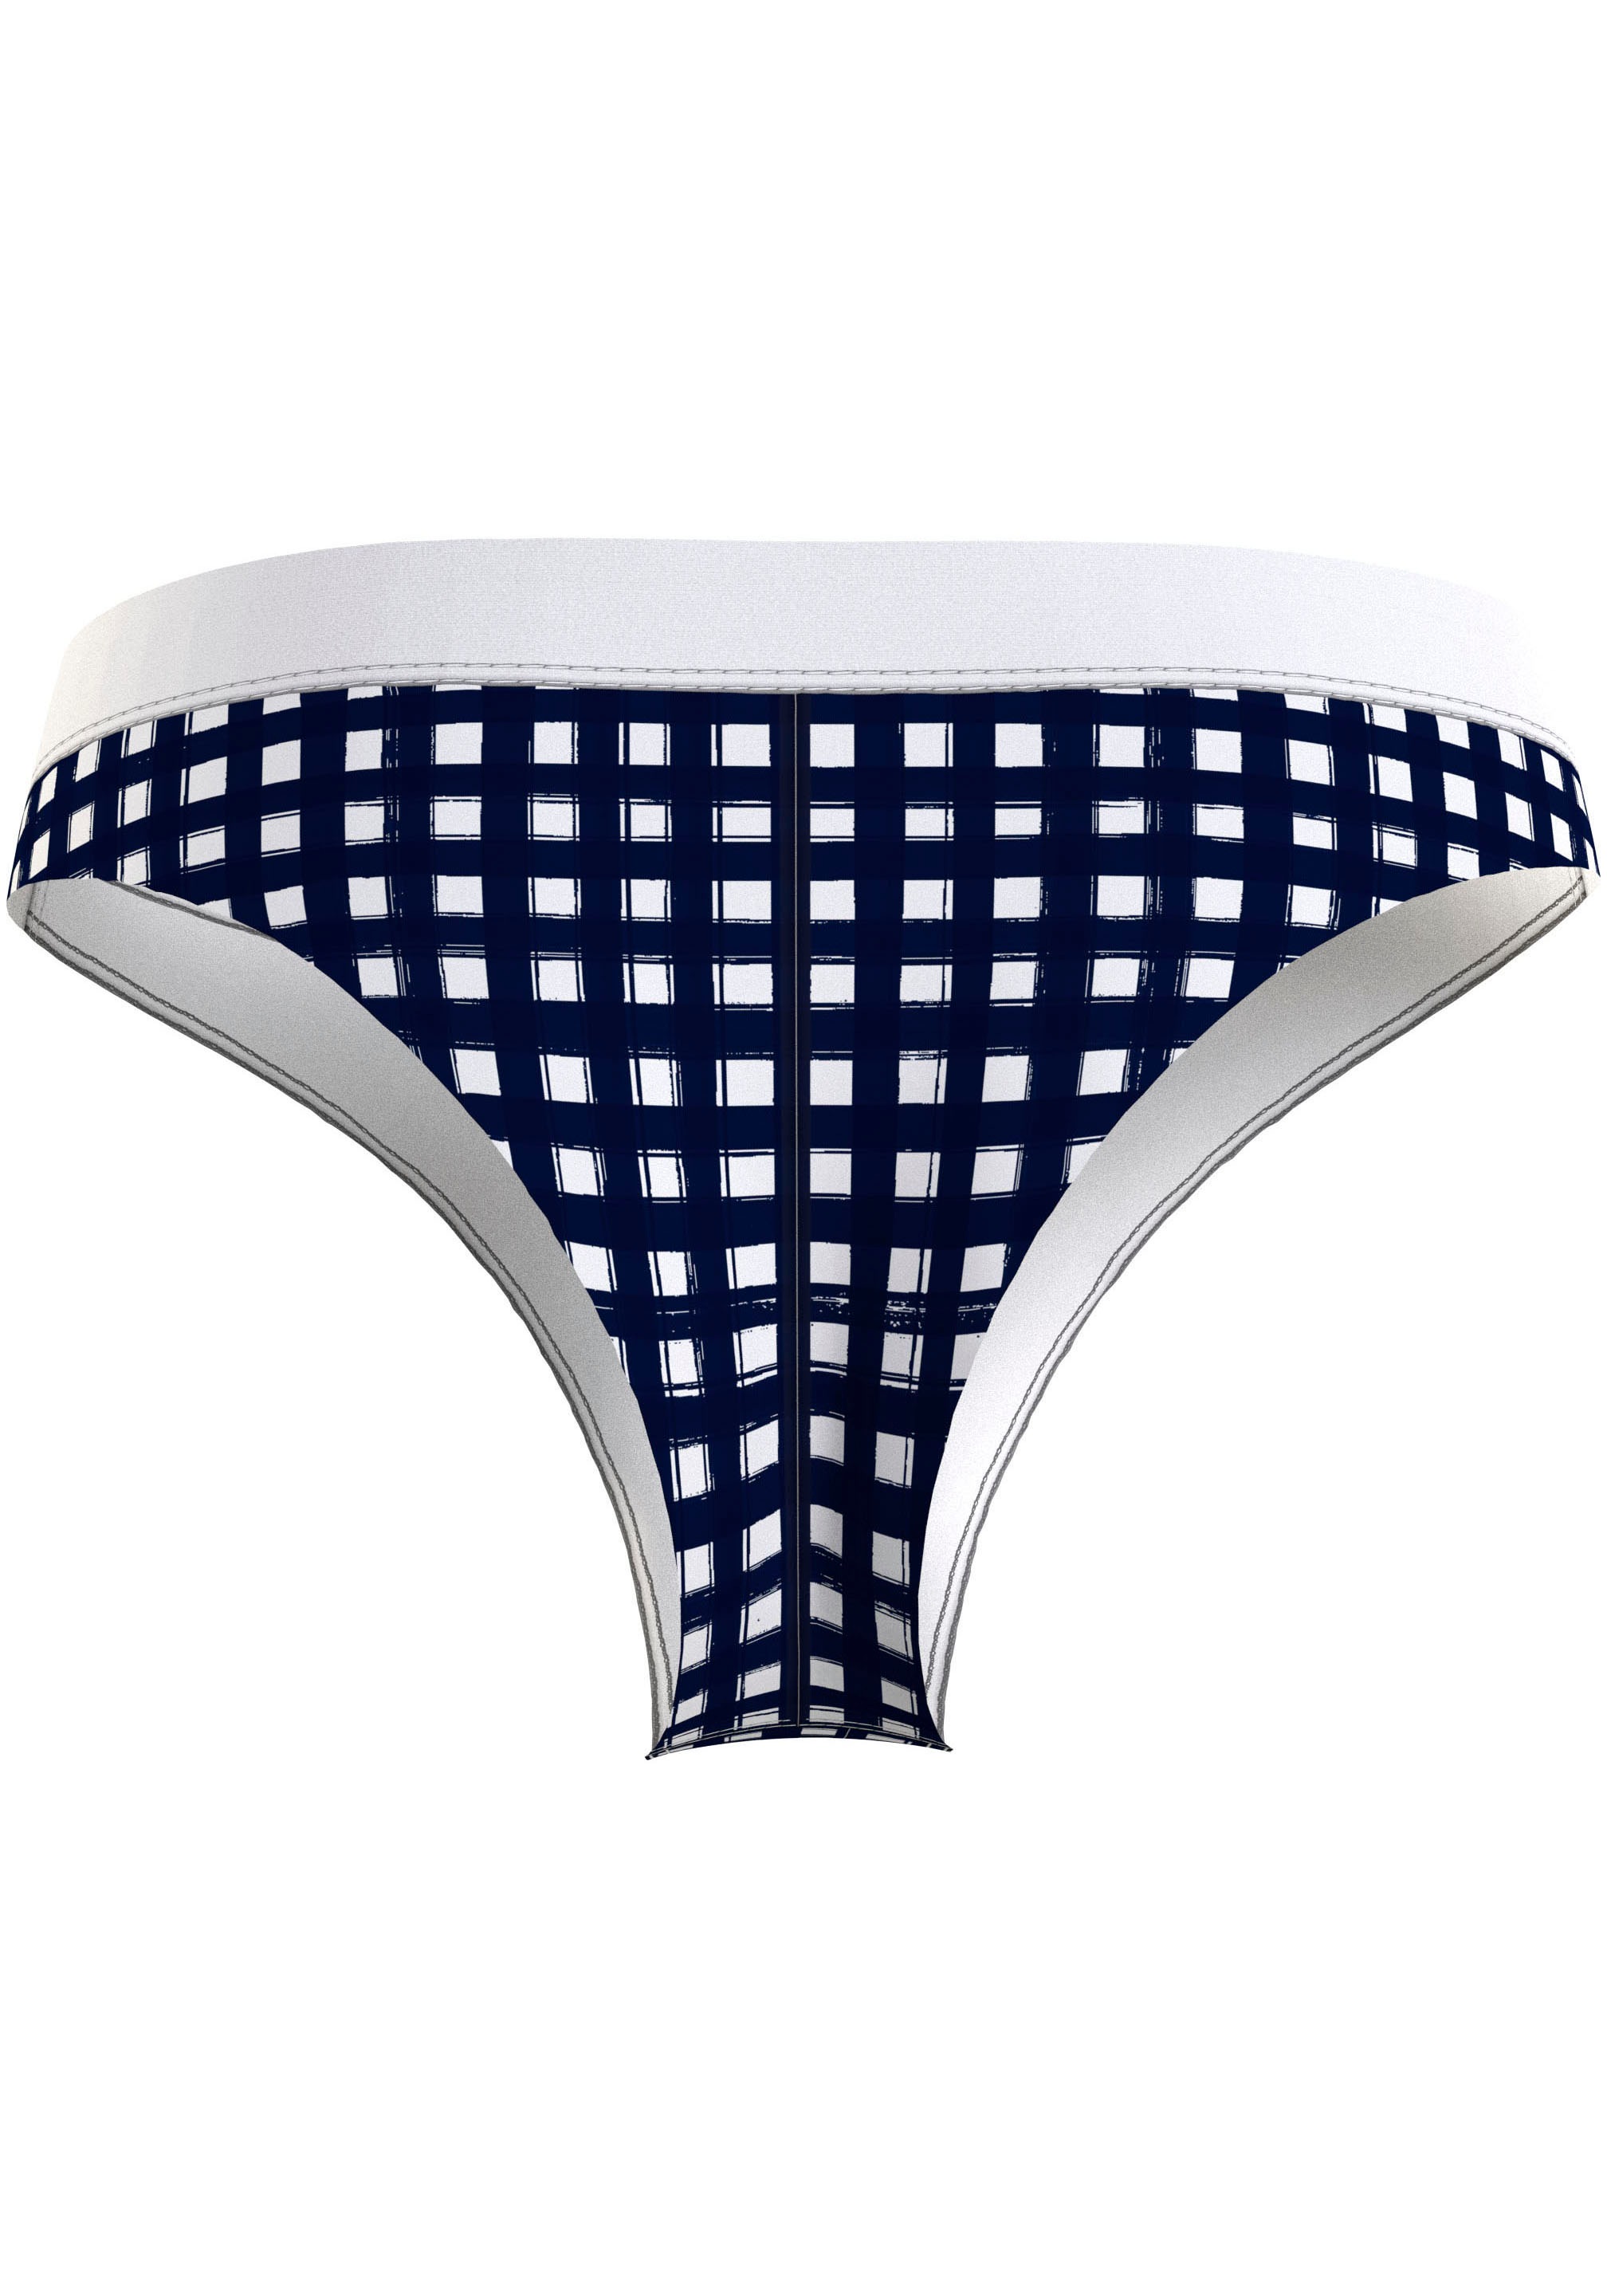 (EXT »BRAZILIAN bestellen Tommy Hilfiger Größen Bikini-Hose Swimwear in SIZES)«, erweiterten